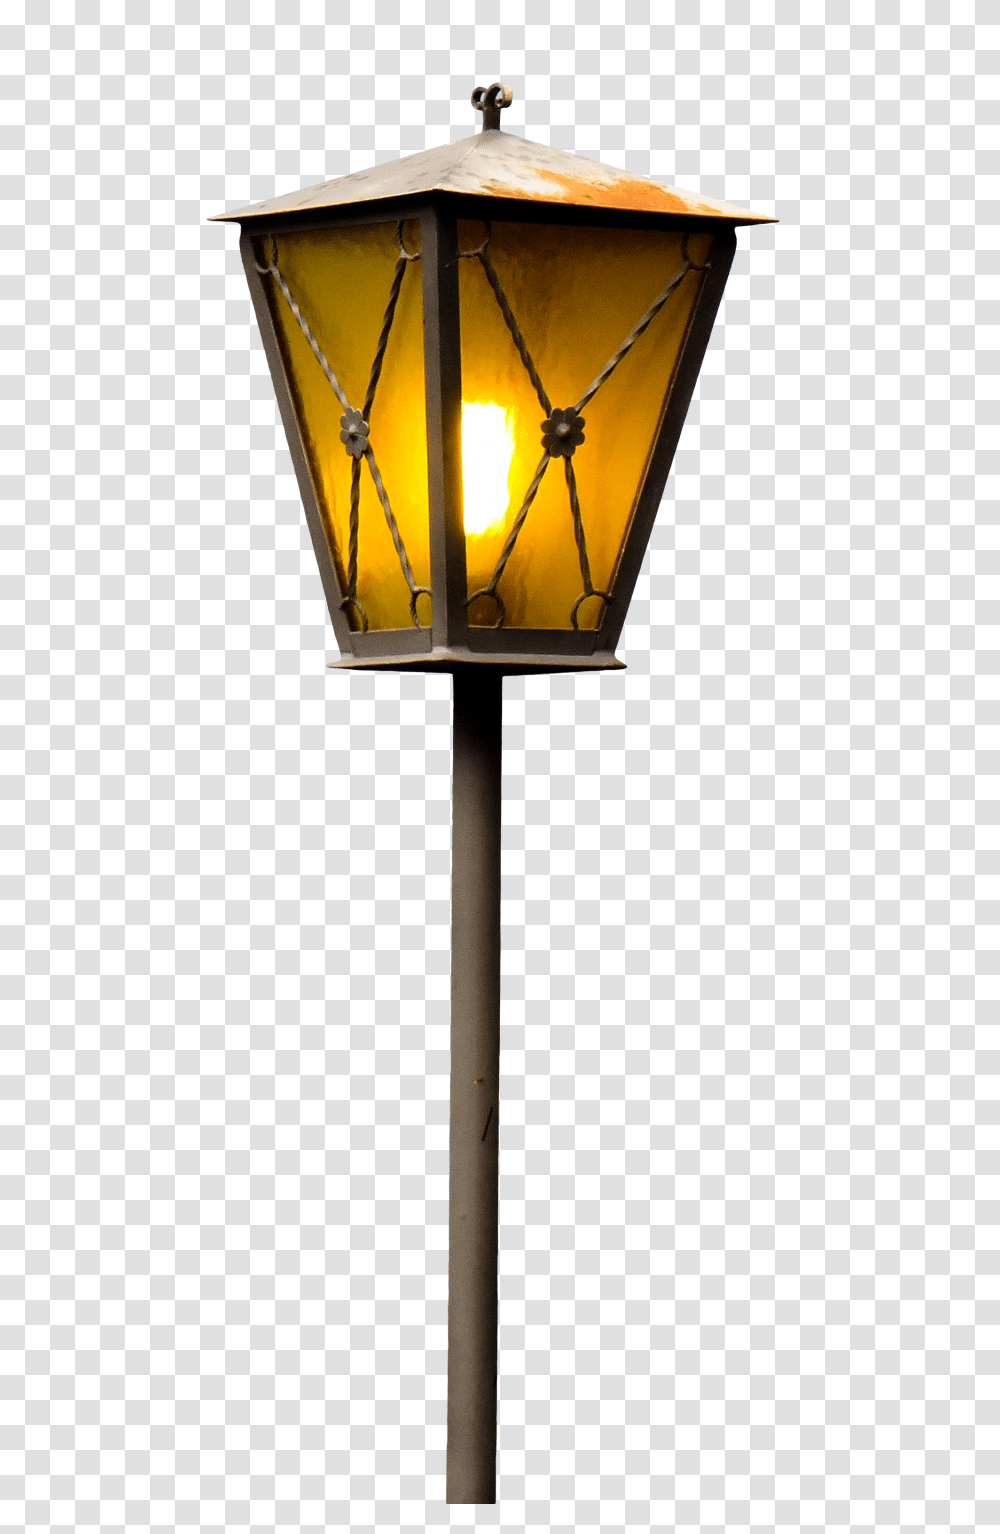 Old Street Lamp Image, Lampshade, Lamp Post Transparent Png